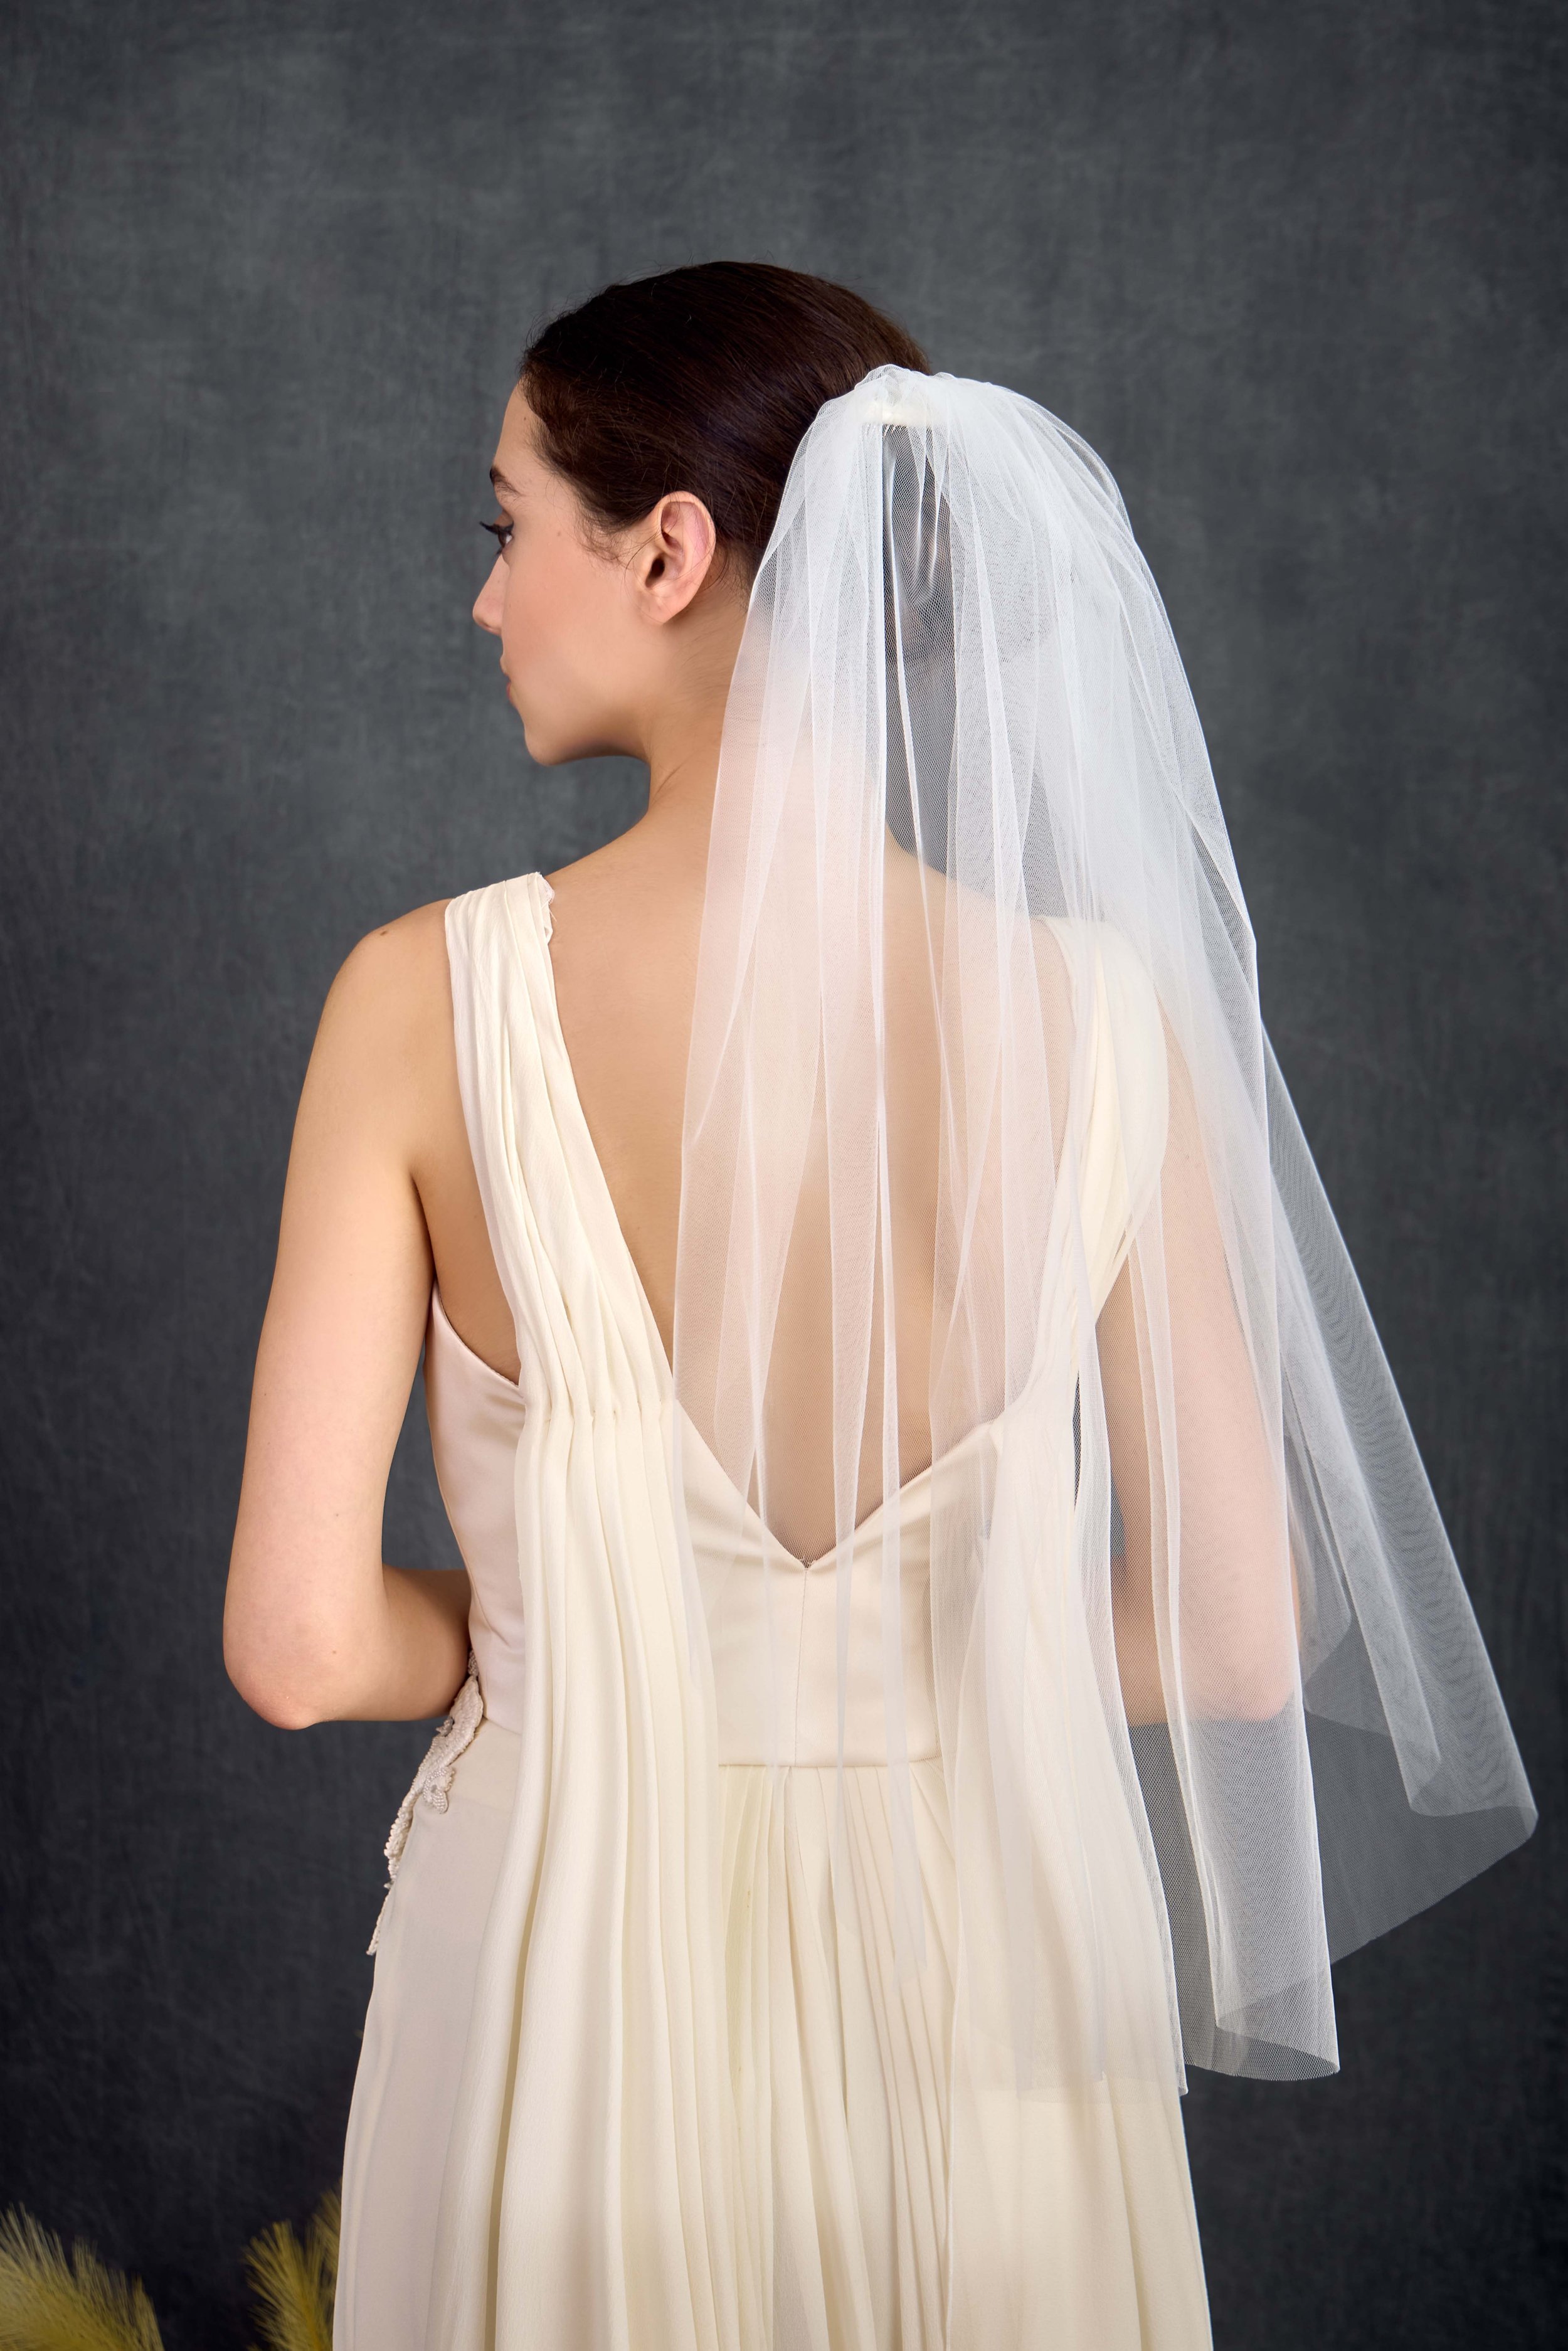 wv28 BNWT 3 tier Semi-stiff Bridal Wedding Veil Tulle Ivory White 